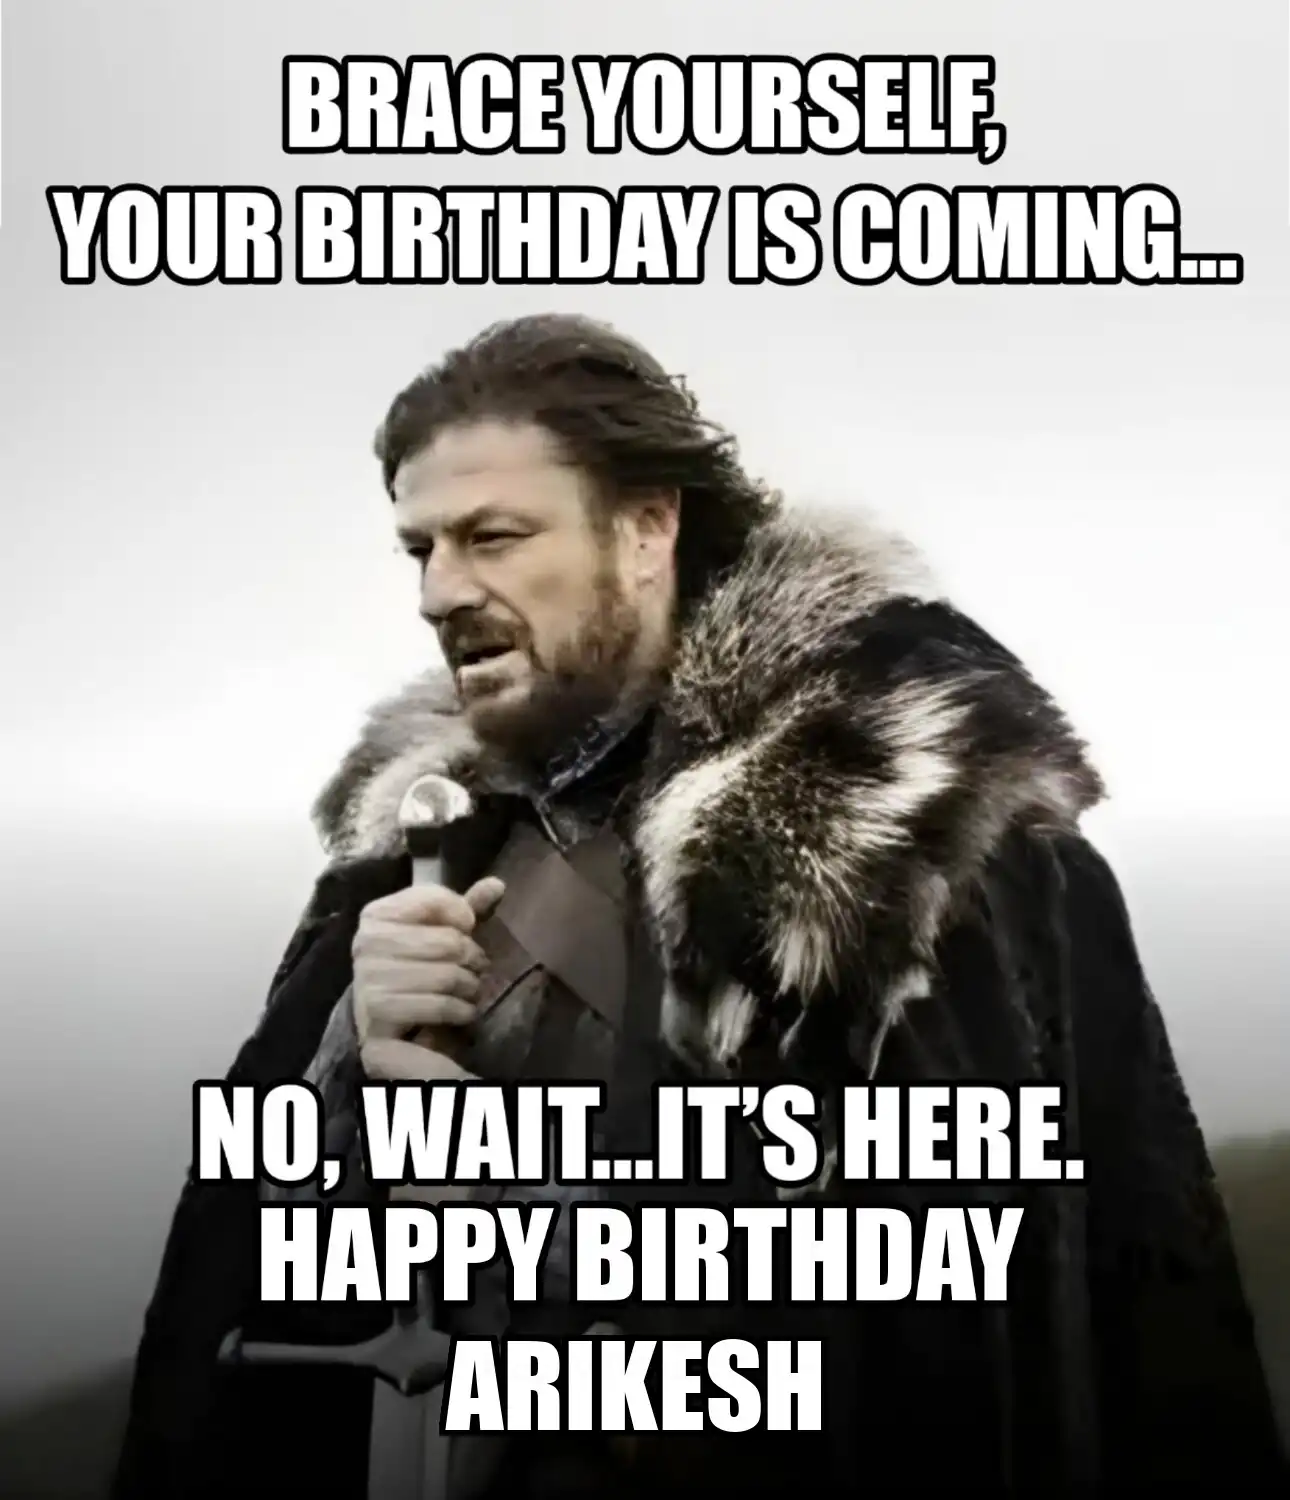 Happy Birthday Arikesh Brace Yourself Your Birthday Is Coming Meme